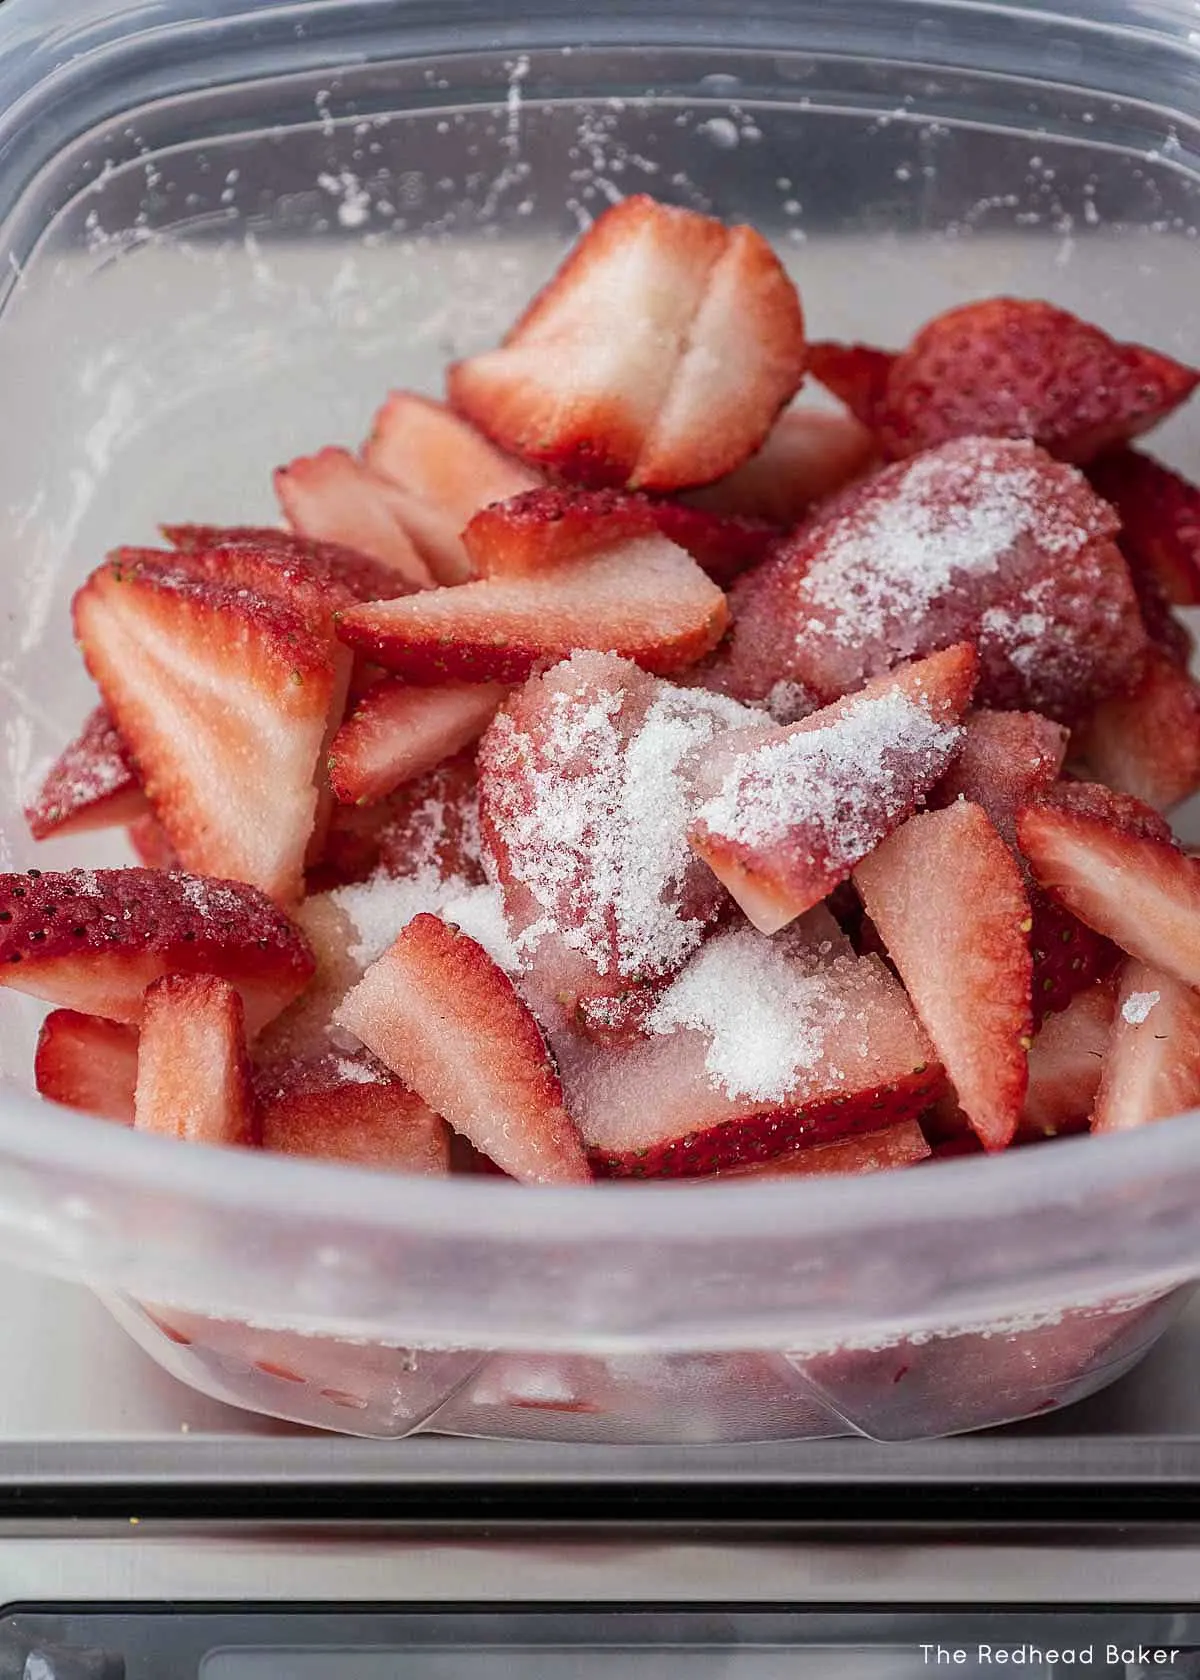 Sliced strawberries with sugar and lemon juice.